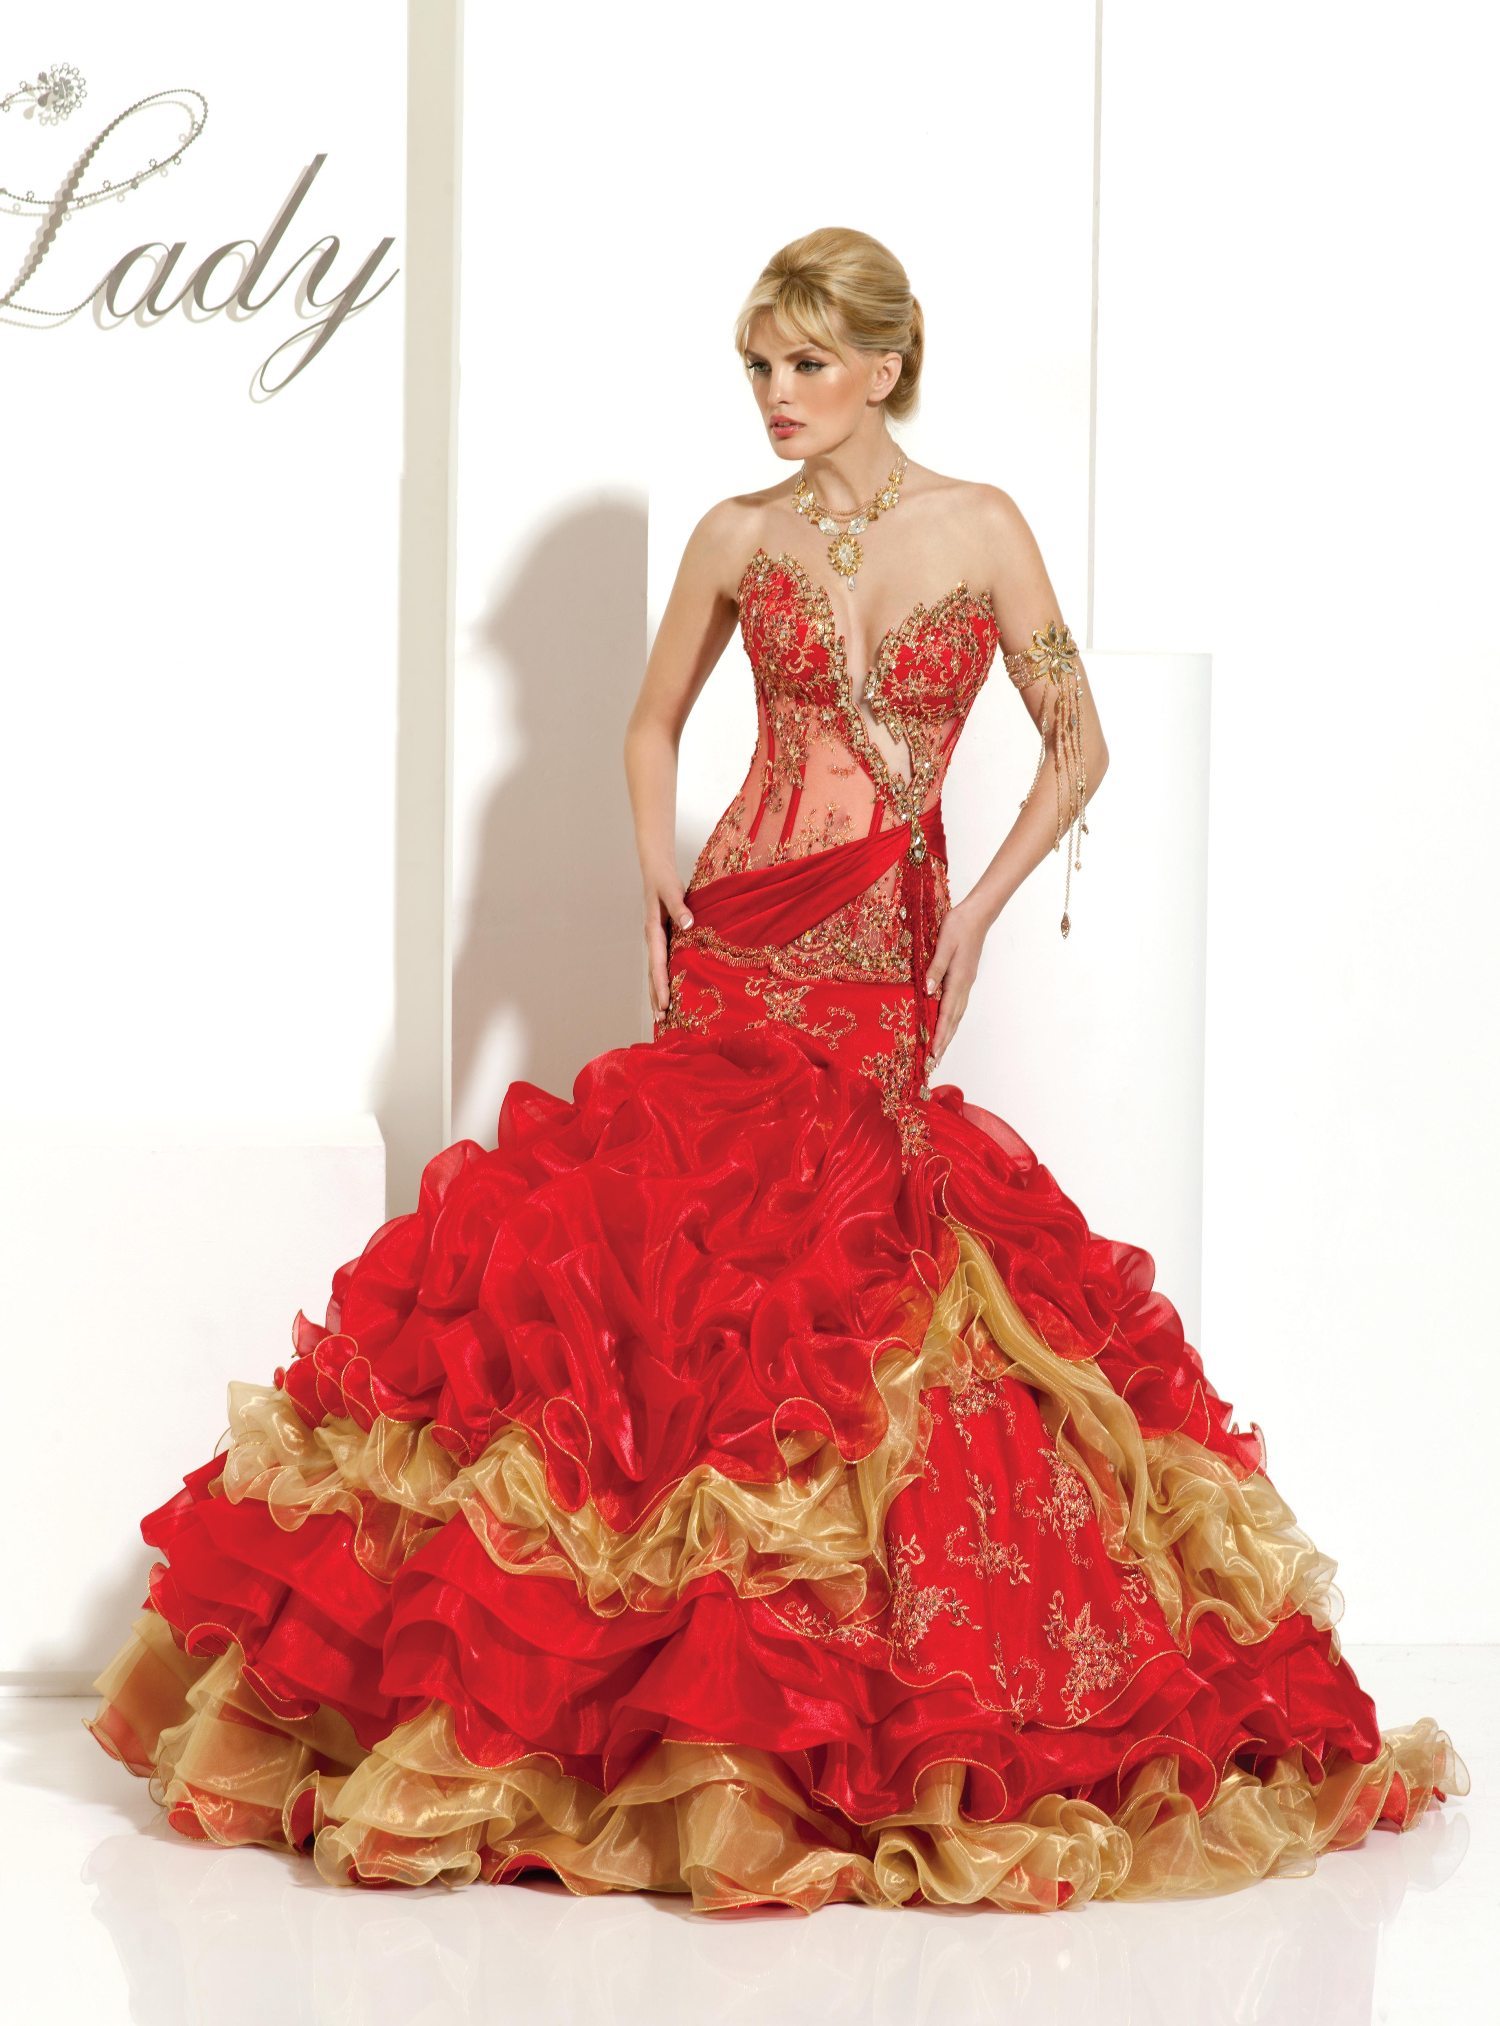 Wedding Dress - Princess Odelie - Princess Odelie Skirt - Lady Lola Bracelet | MyLady Bridal Gown